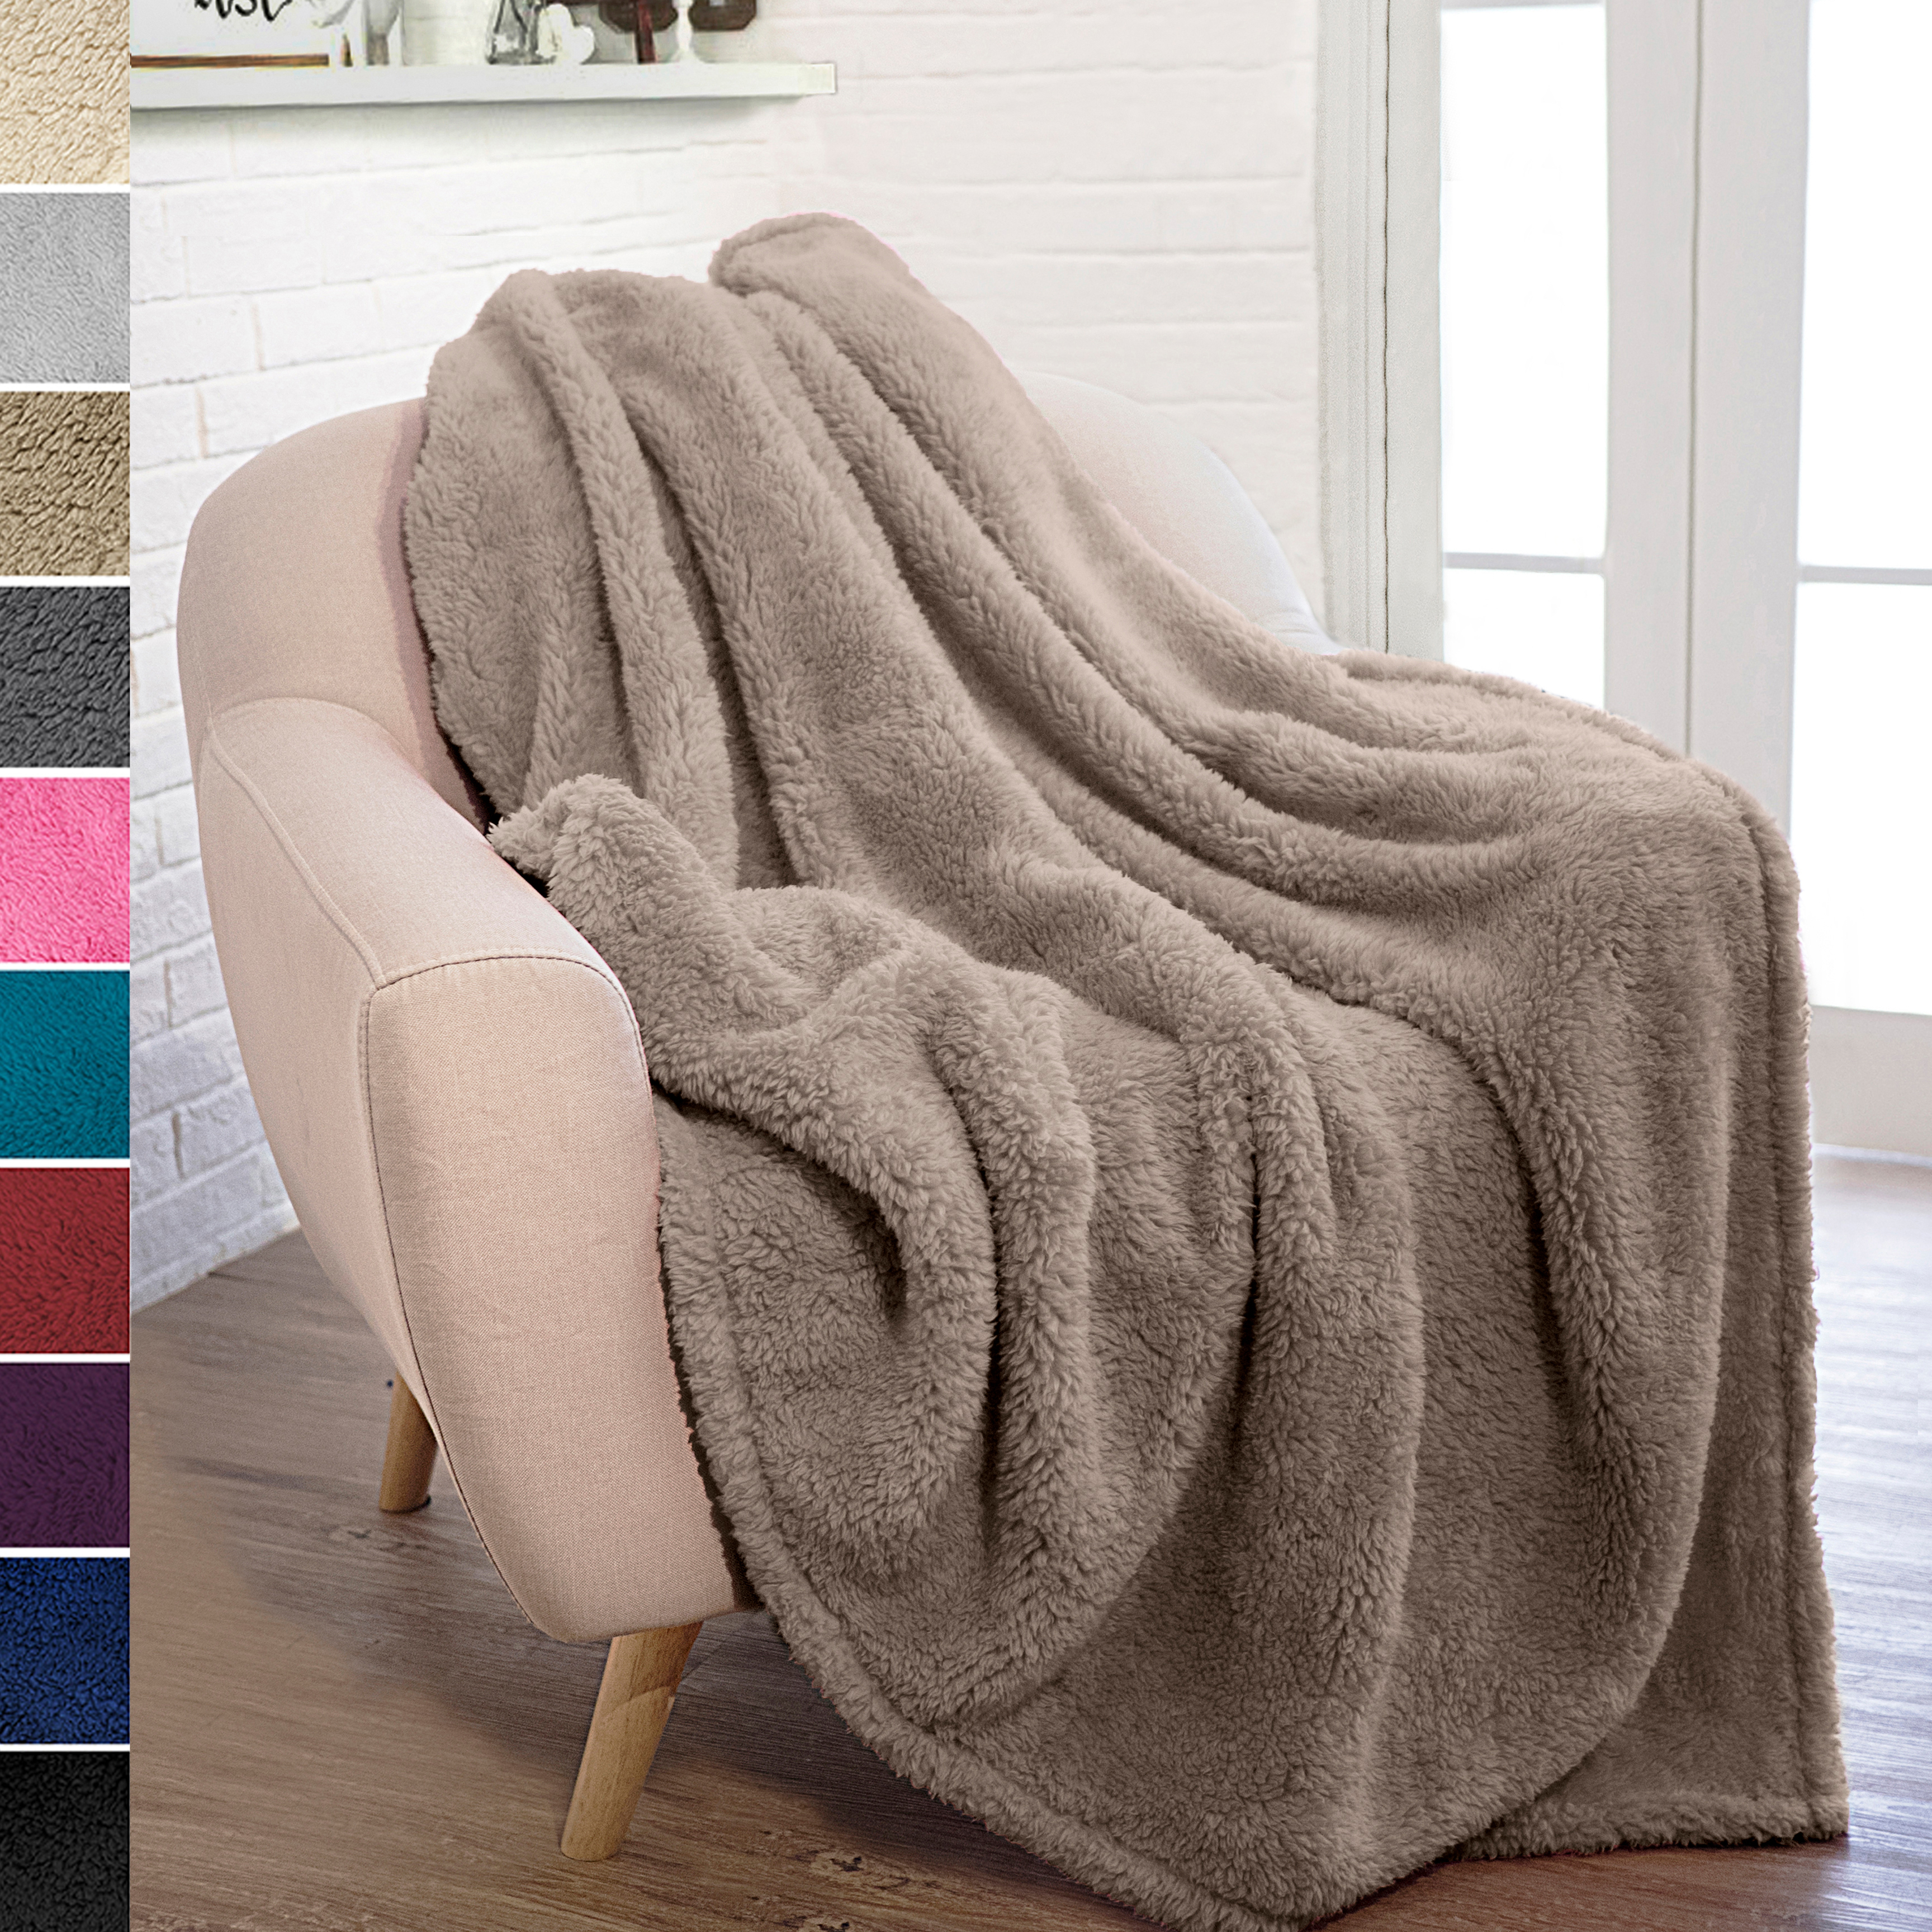 FFLMYUHUL I U Ultra Super Soft Lightweight Cozy Throw Blanket for Bed Couch Warm Fuzzy Sherpa Blanket/Throw Blanket for Shower Gift Lavender 